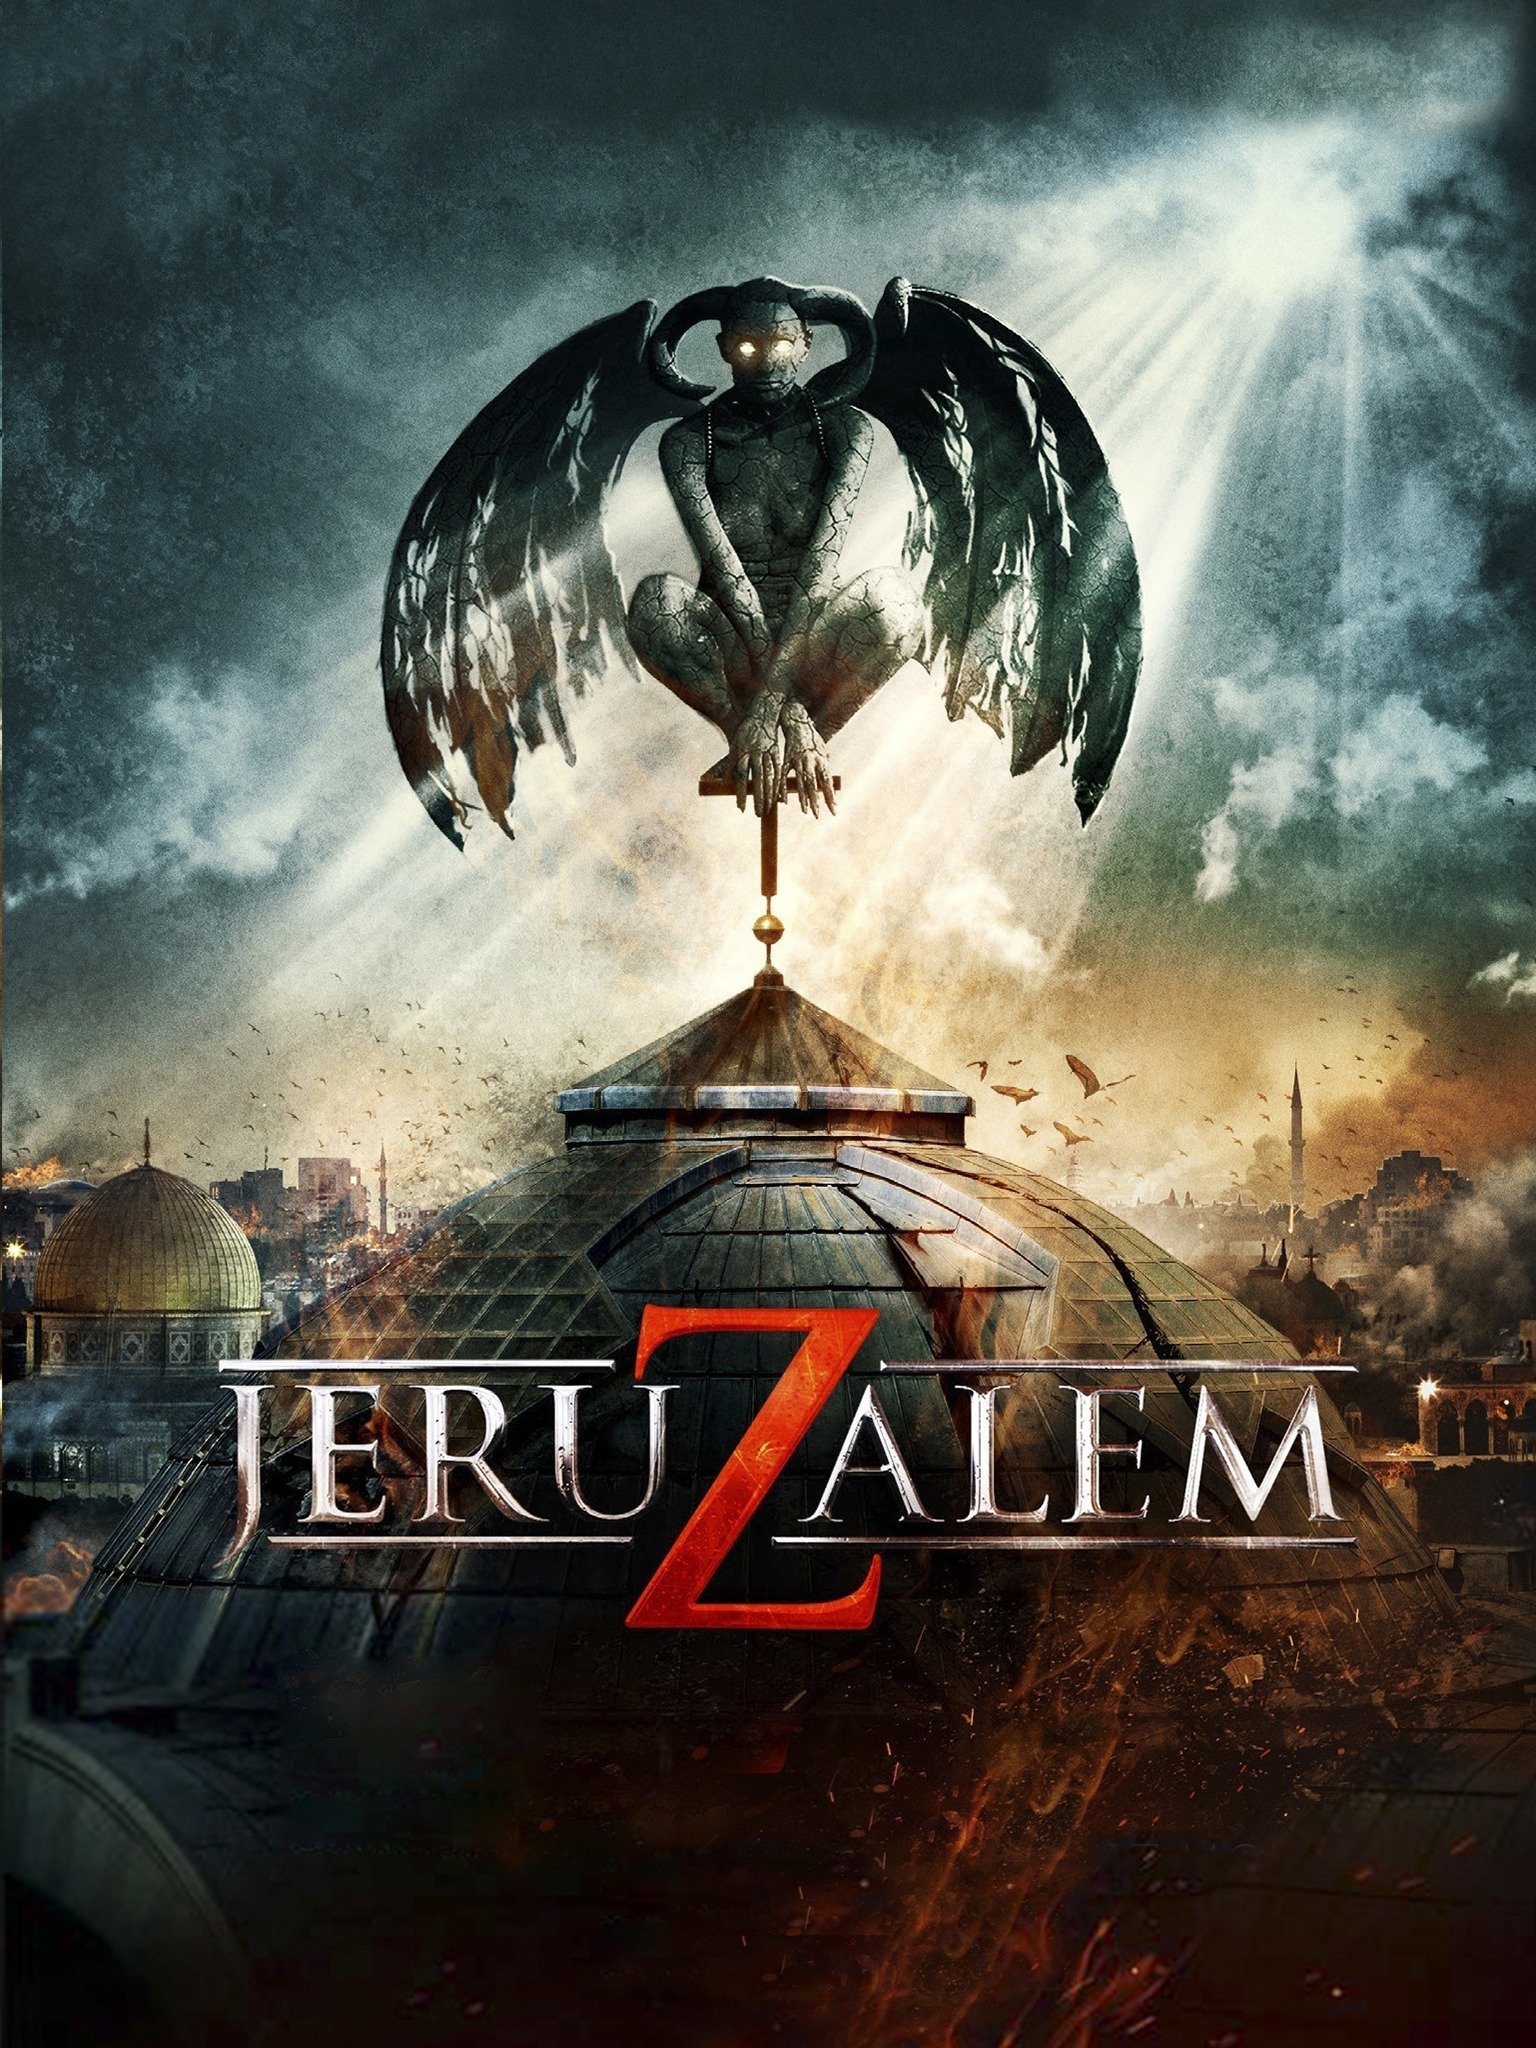 Jeruzalem: Trailer 1 - Trailers & Videos - Rotten Tomatoes